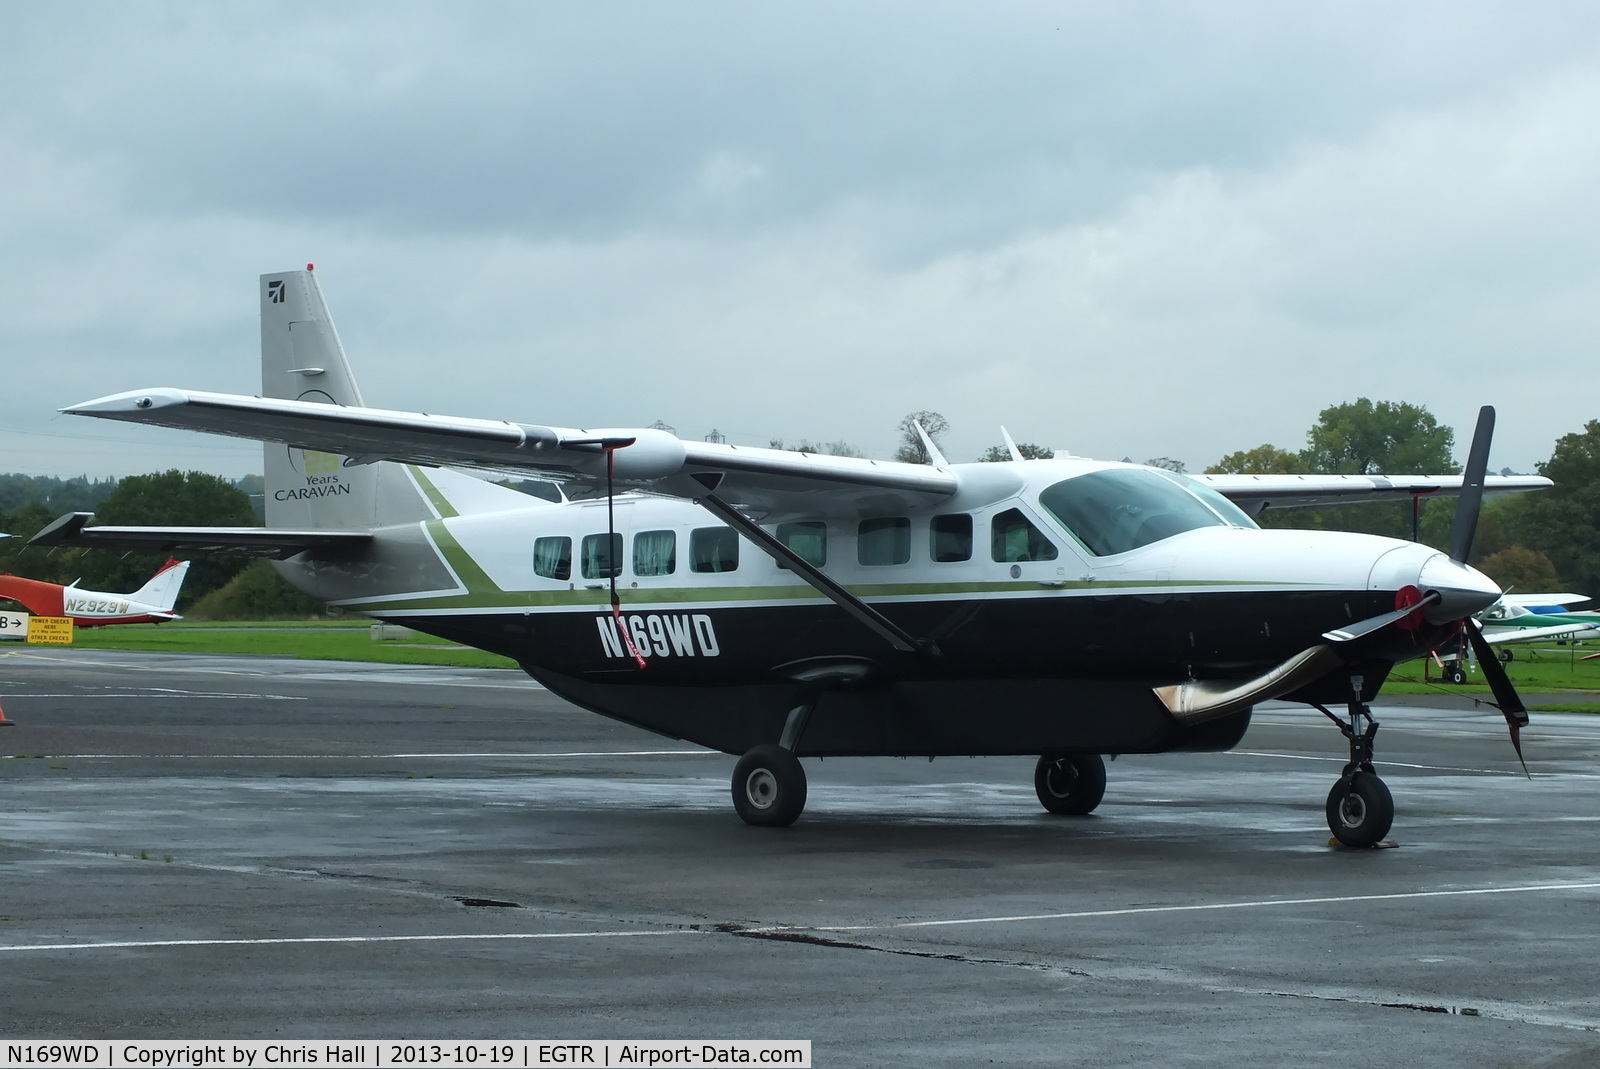 N169WD, Cessna 208B C/N 208B2167, parked at Elstree